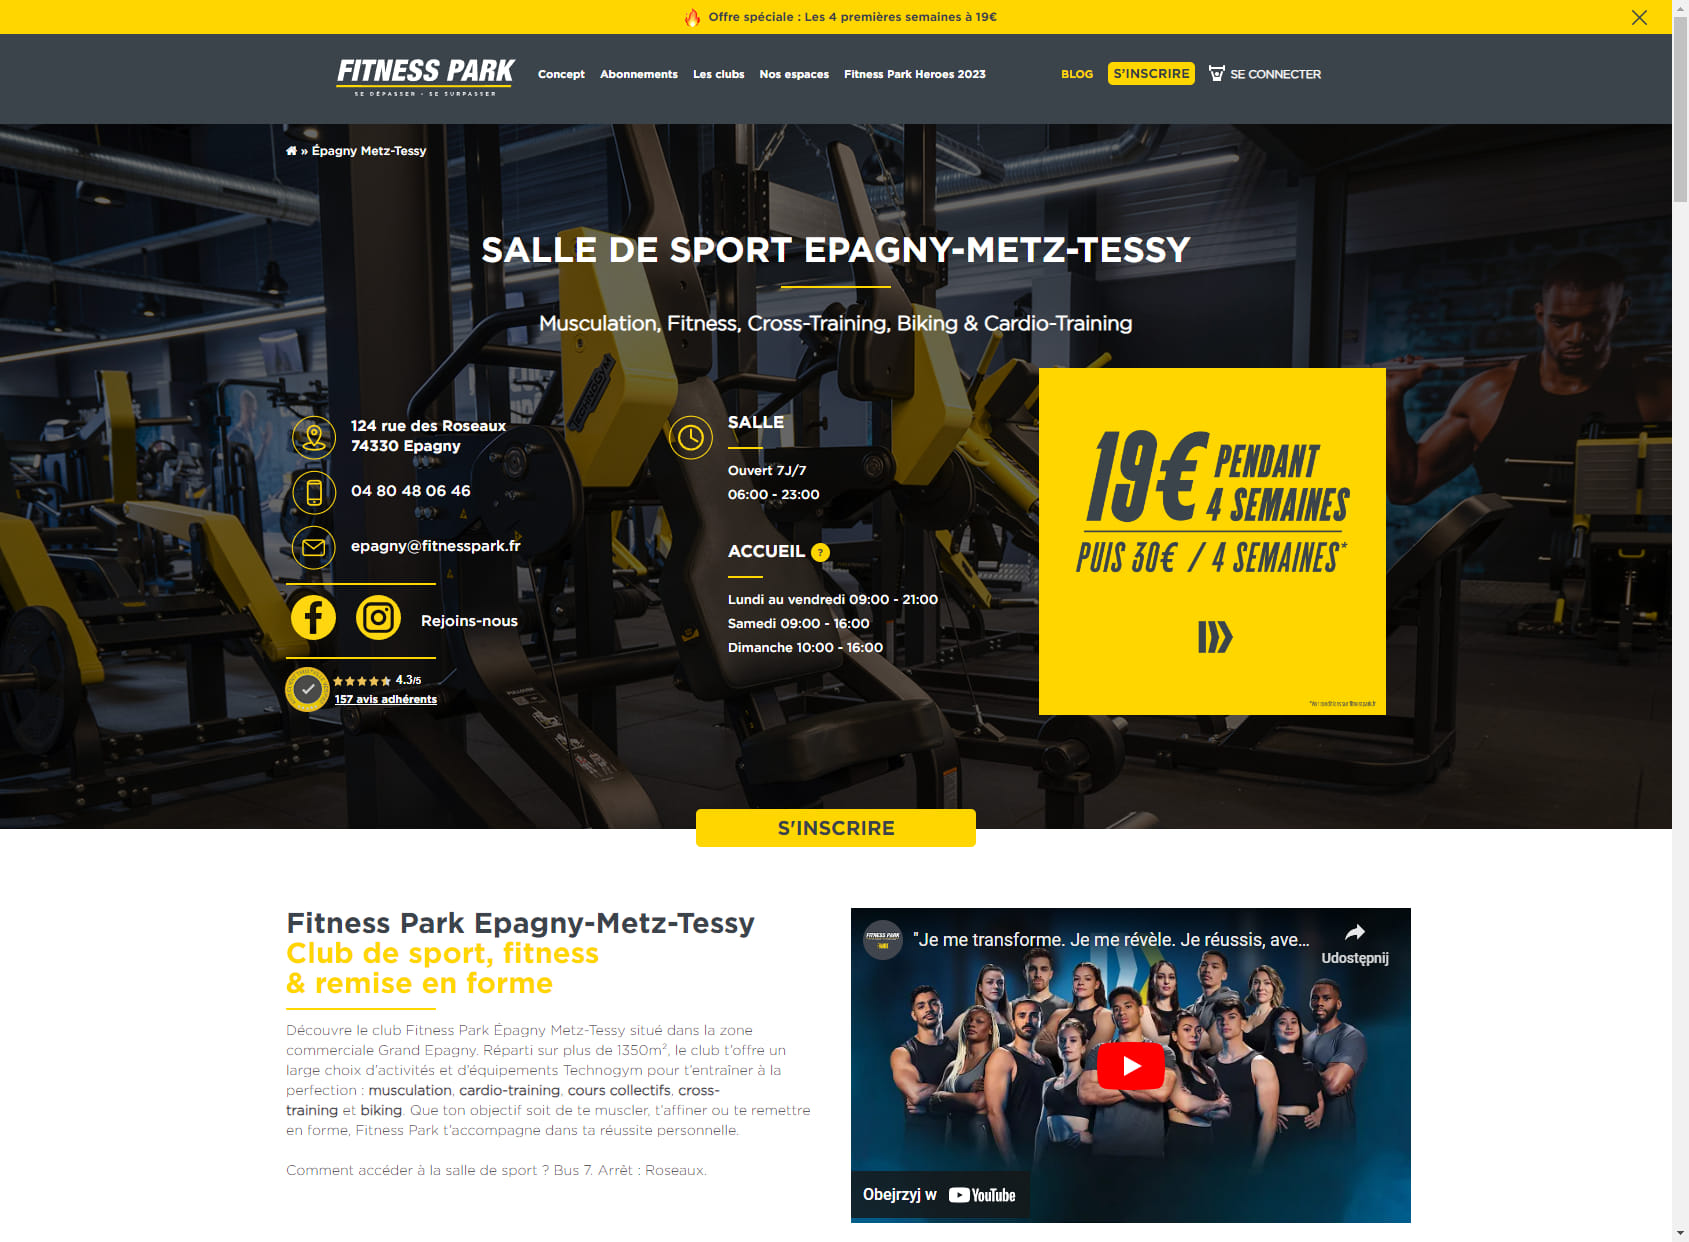 Salle de sport Epagny Metz-Tessy - Fitness Park